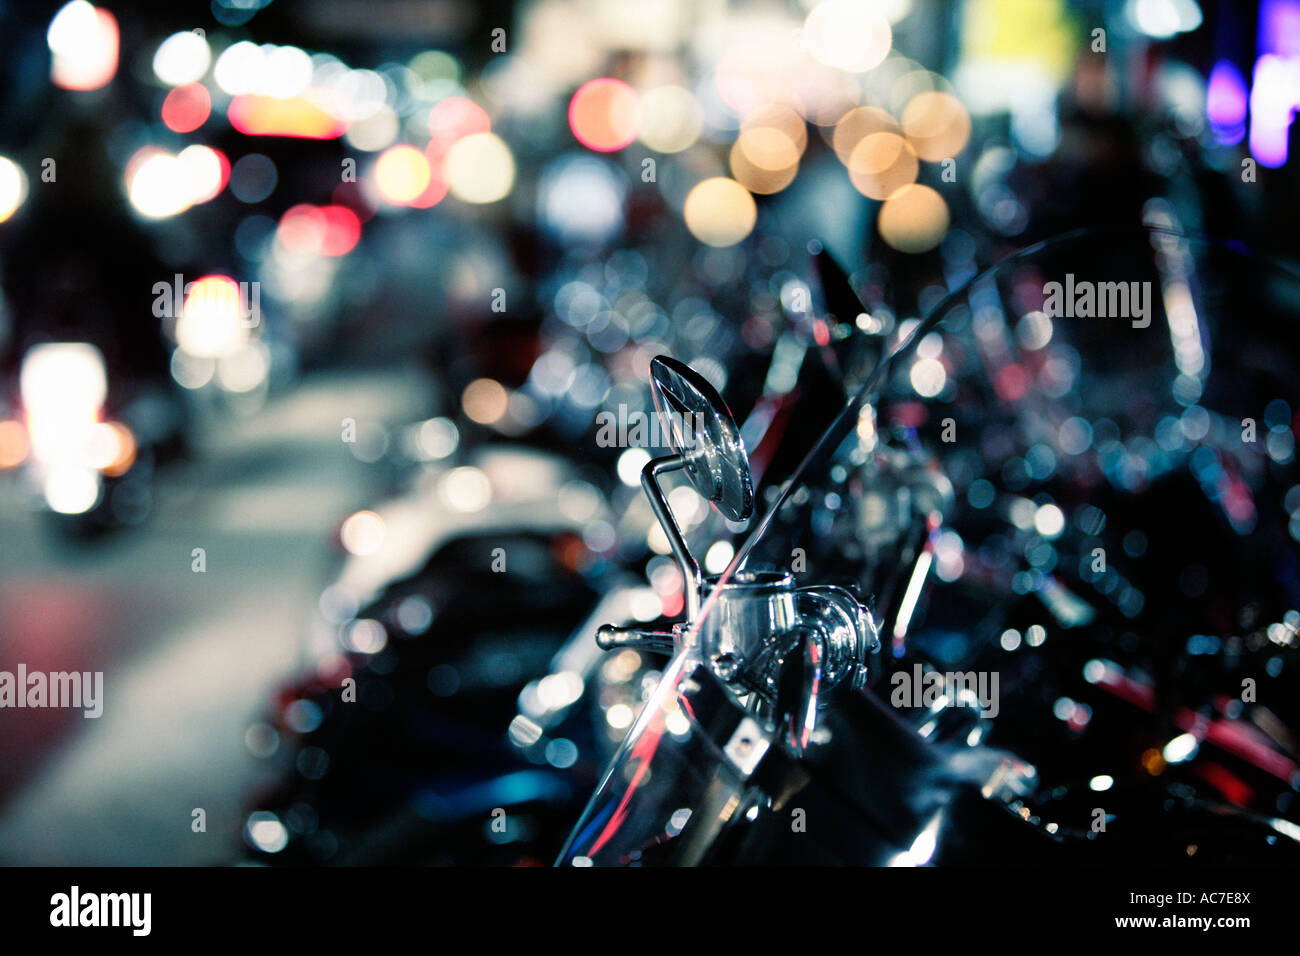 Row of Harley Davidson motorcycles parked up at night Stock Photo